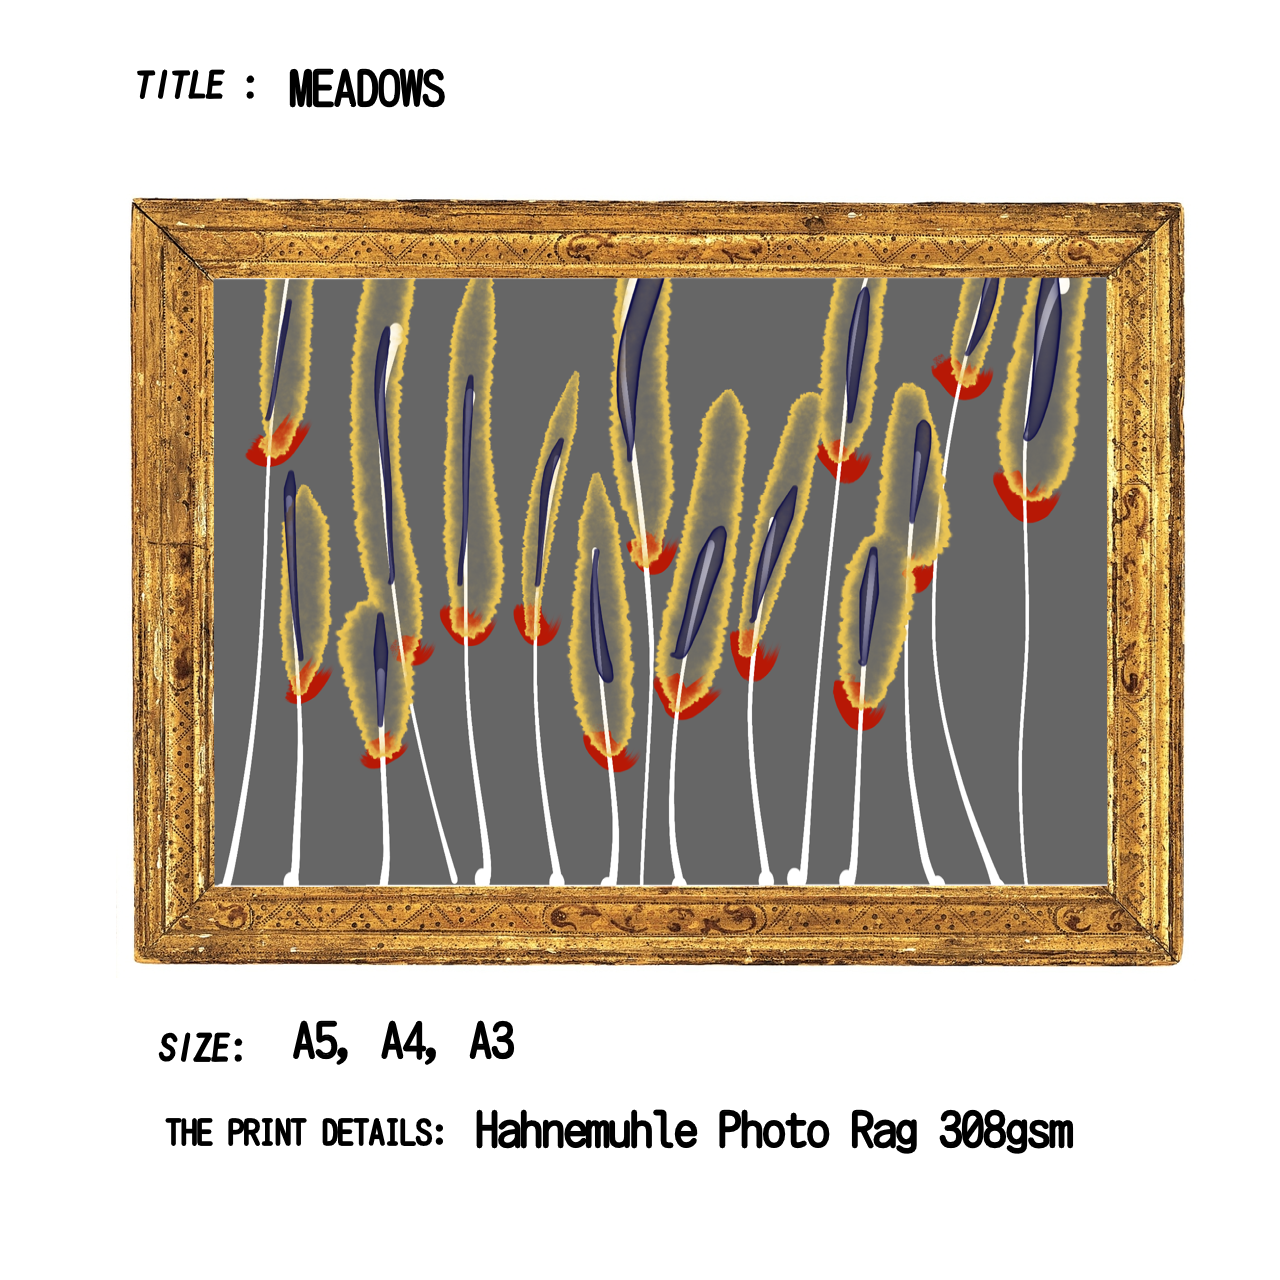 Meadows Hahnemühle Photo Rag Print - valerie-digital-art